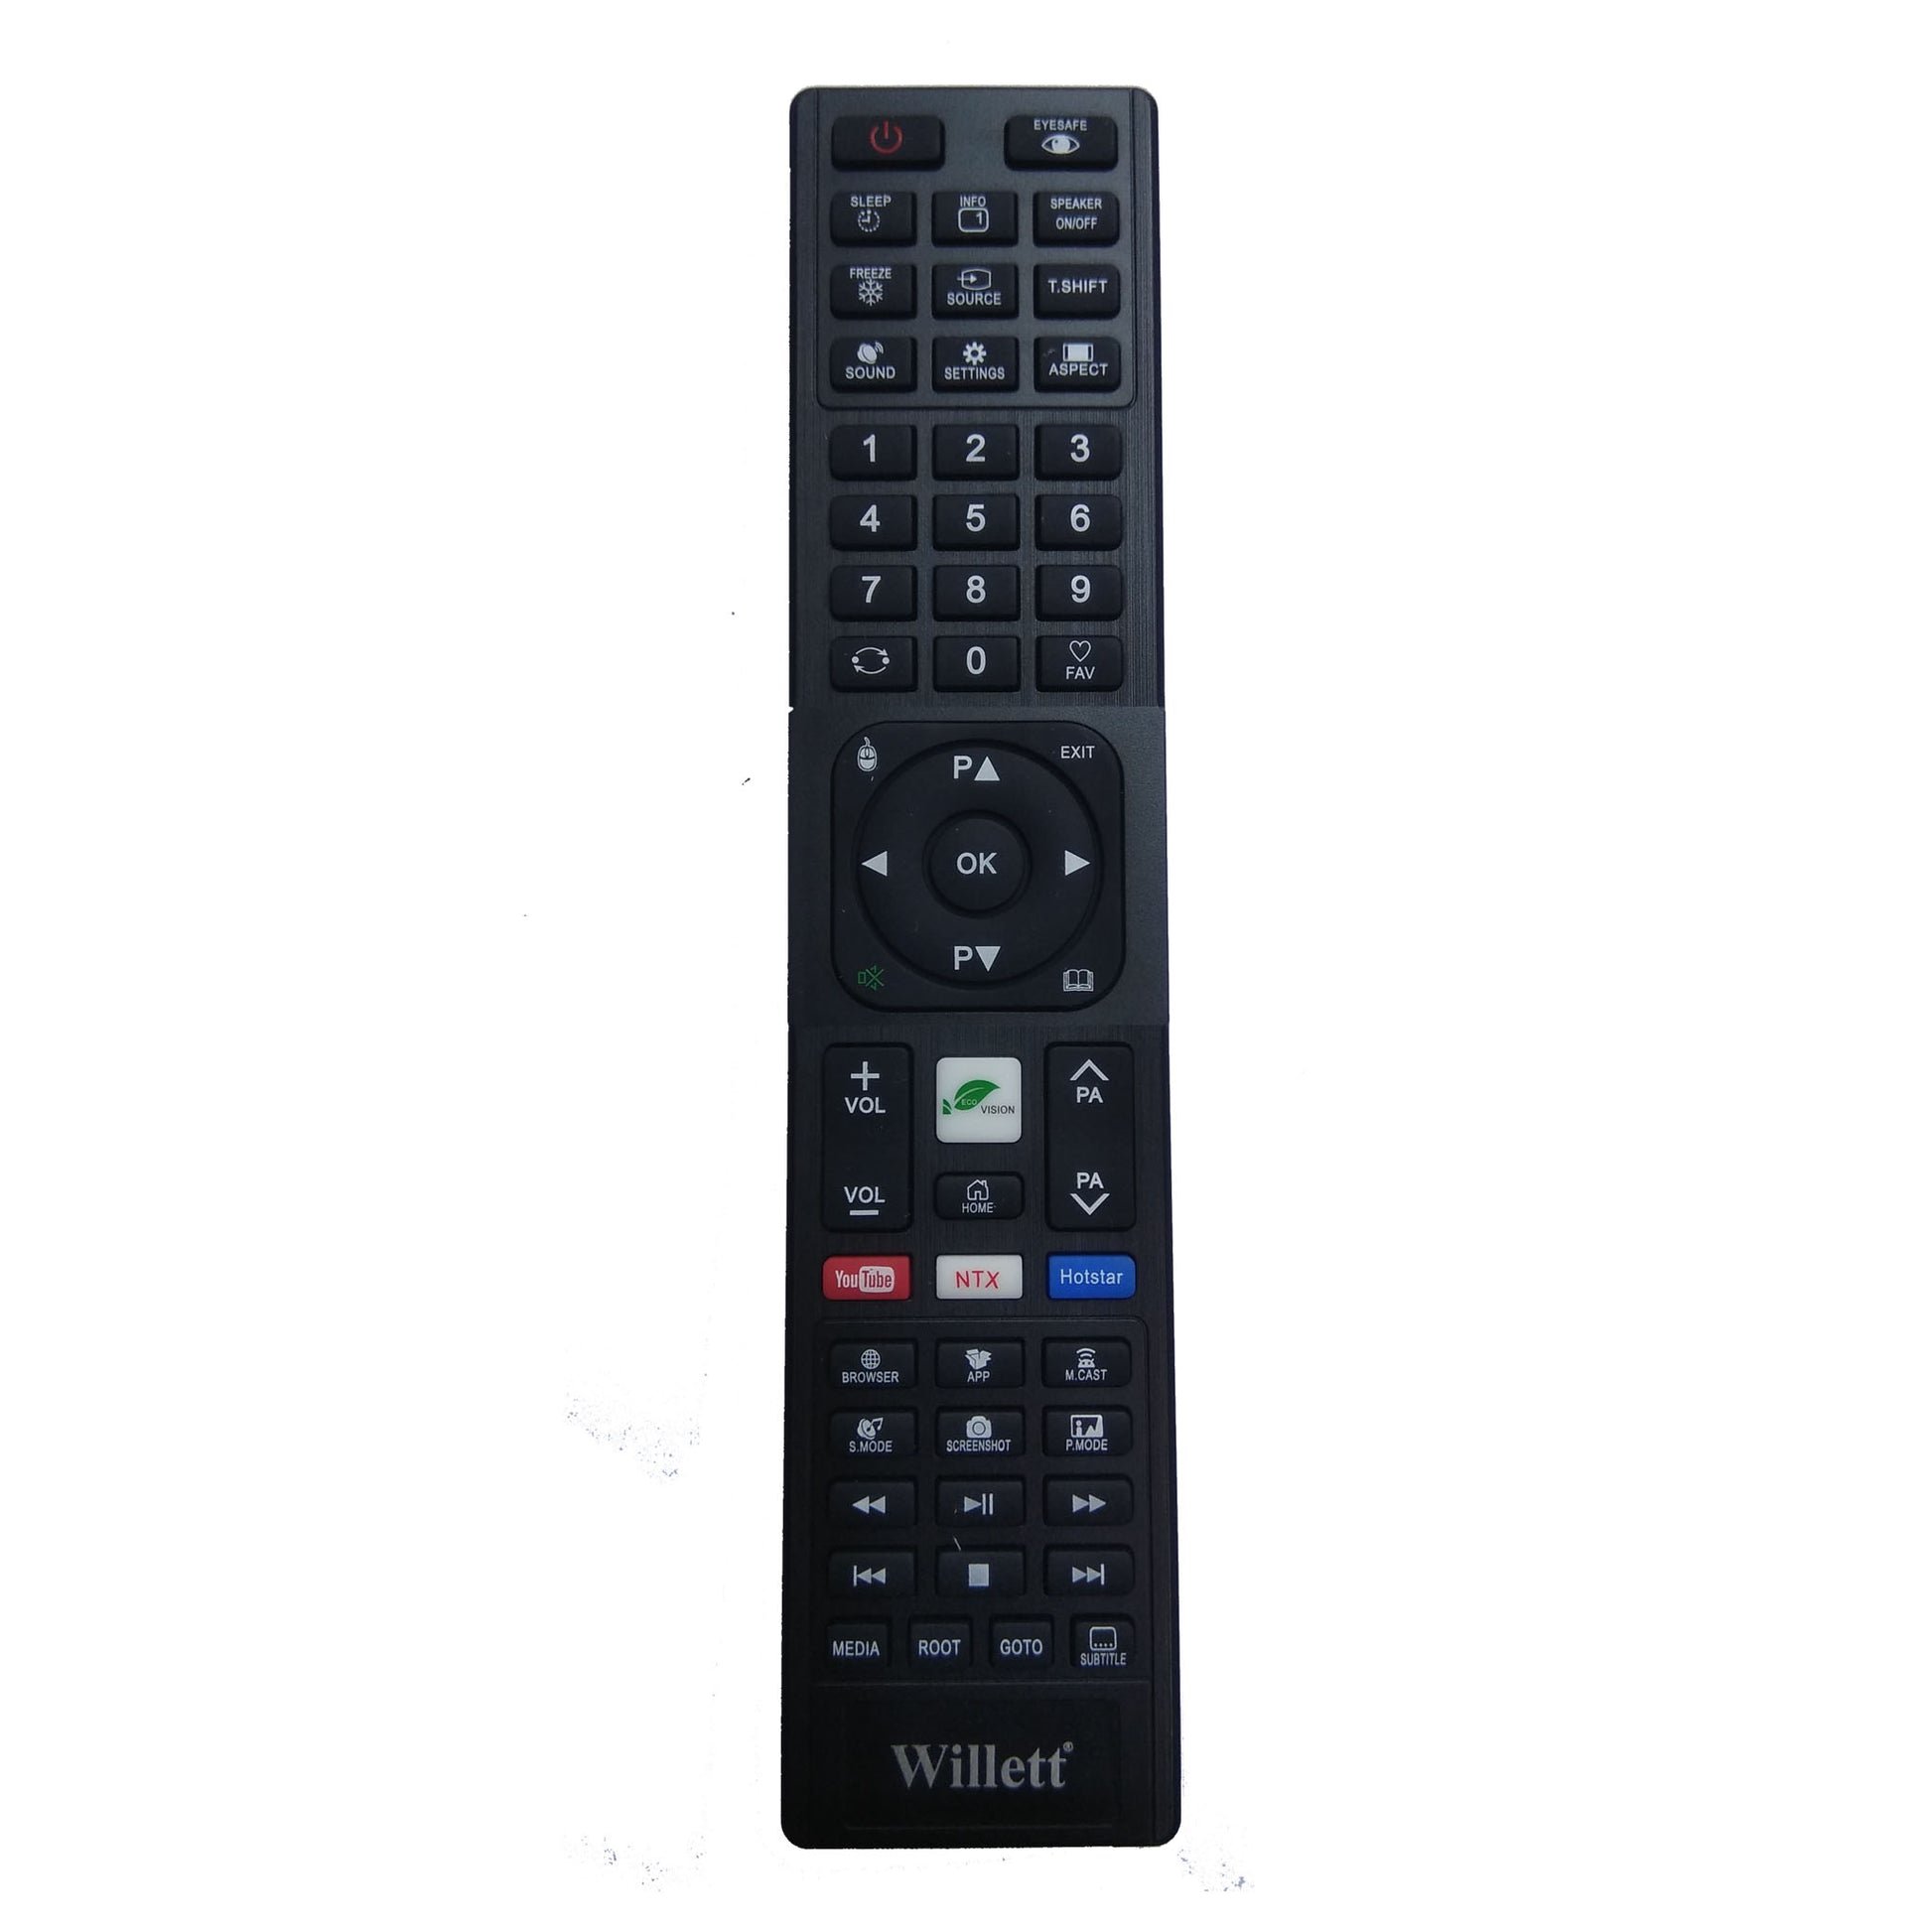 Willet Smart led tv remote - Faritha